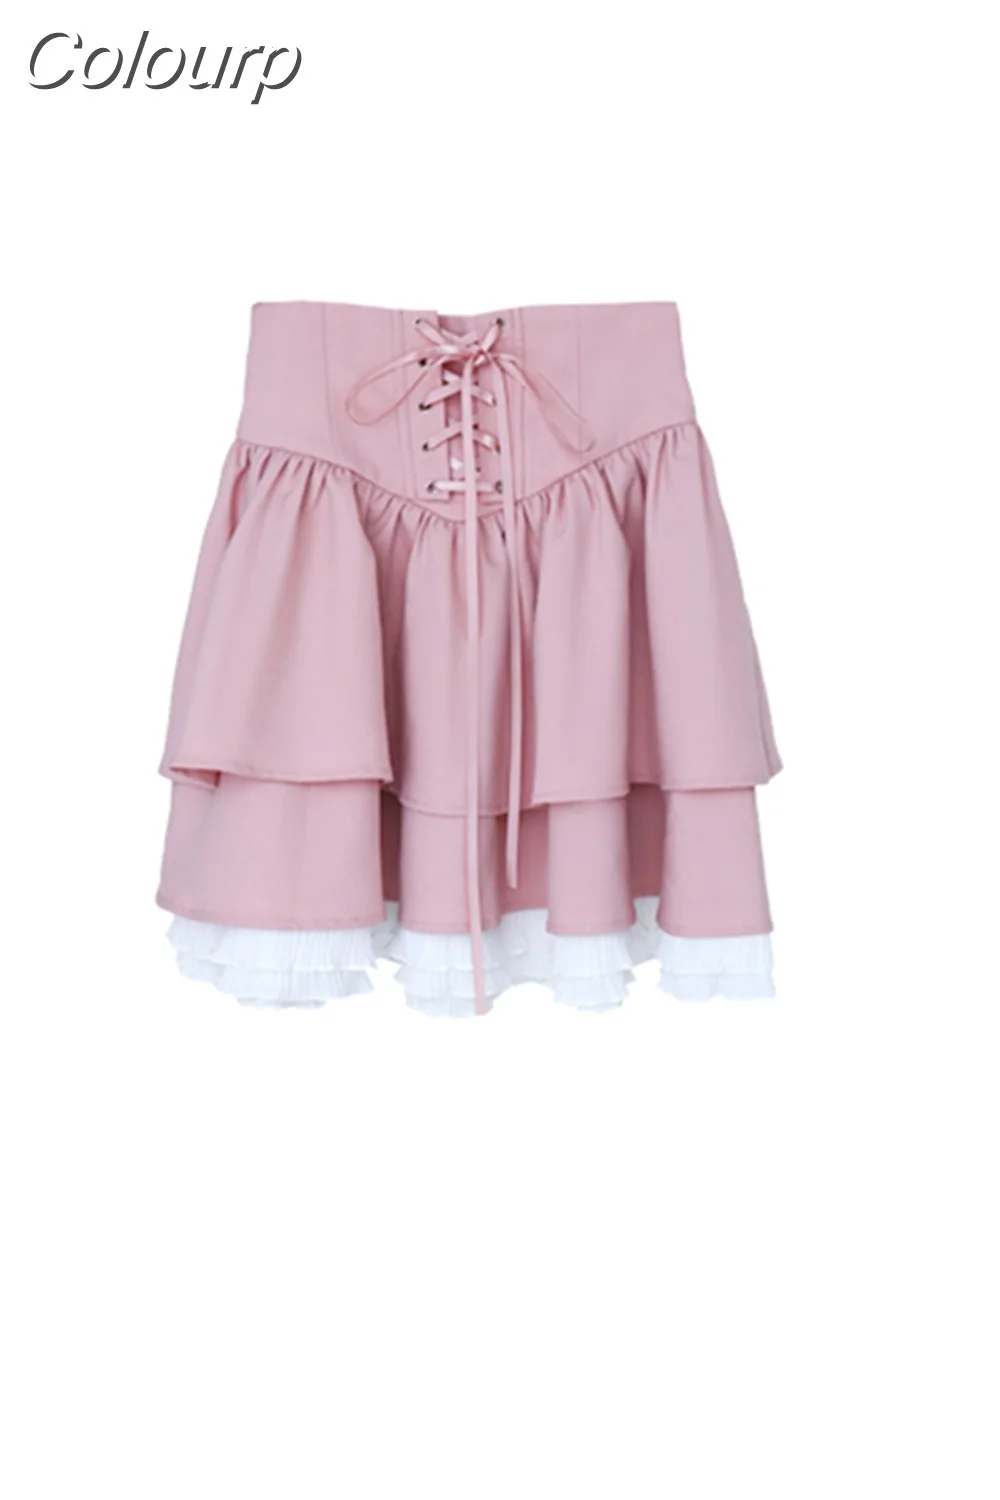 Colourp Kawaii Lolita Two Piece Set Women Puff Sleeve Blouse + Sweet Pink Mini Skirt Floral Korean Style Elegant Skirt Suit 2023